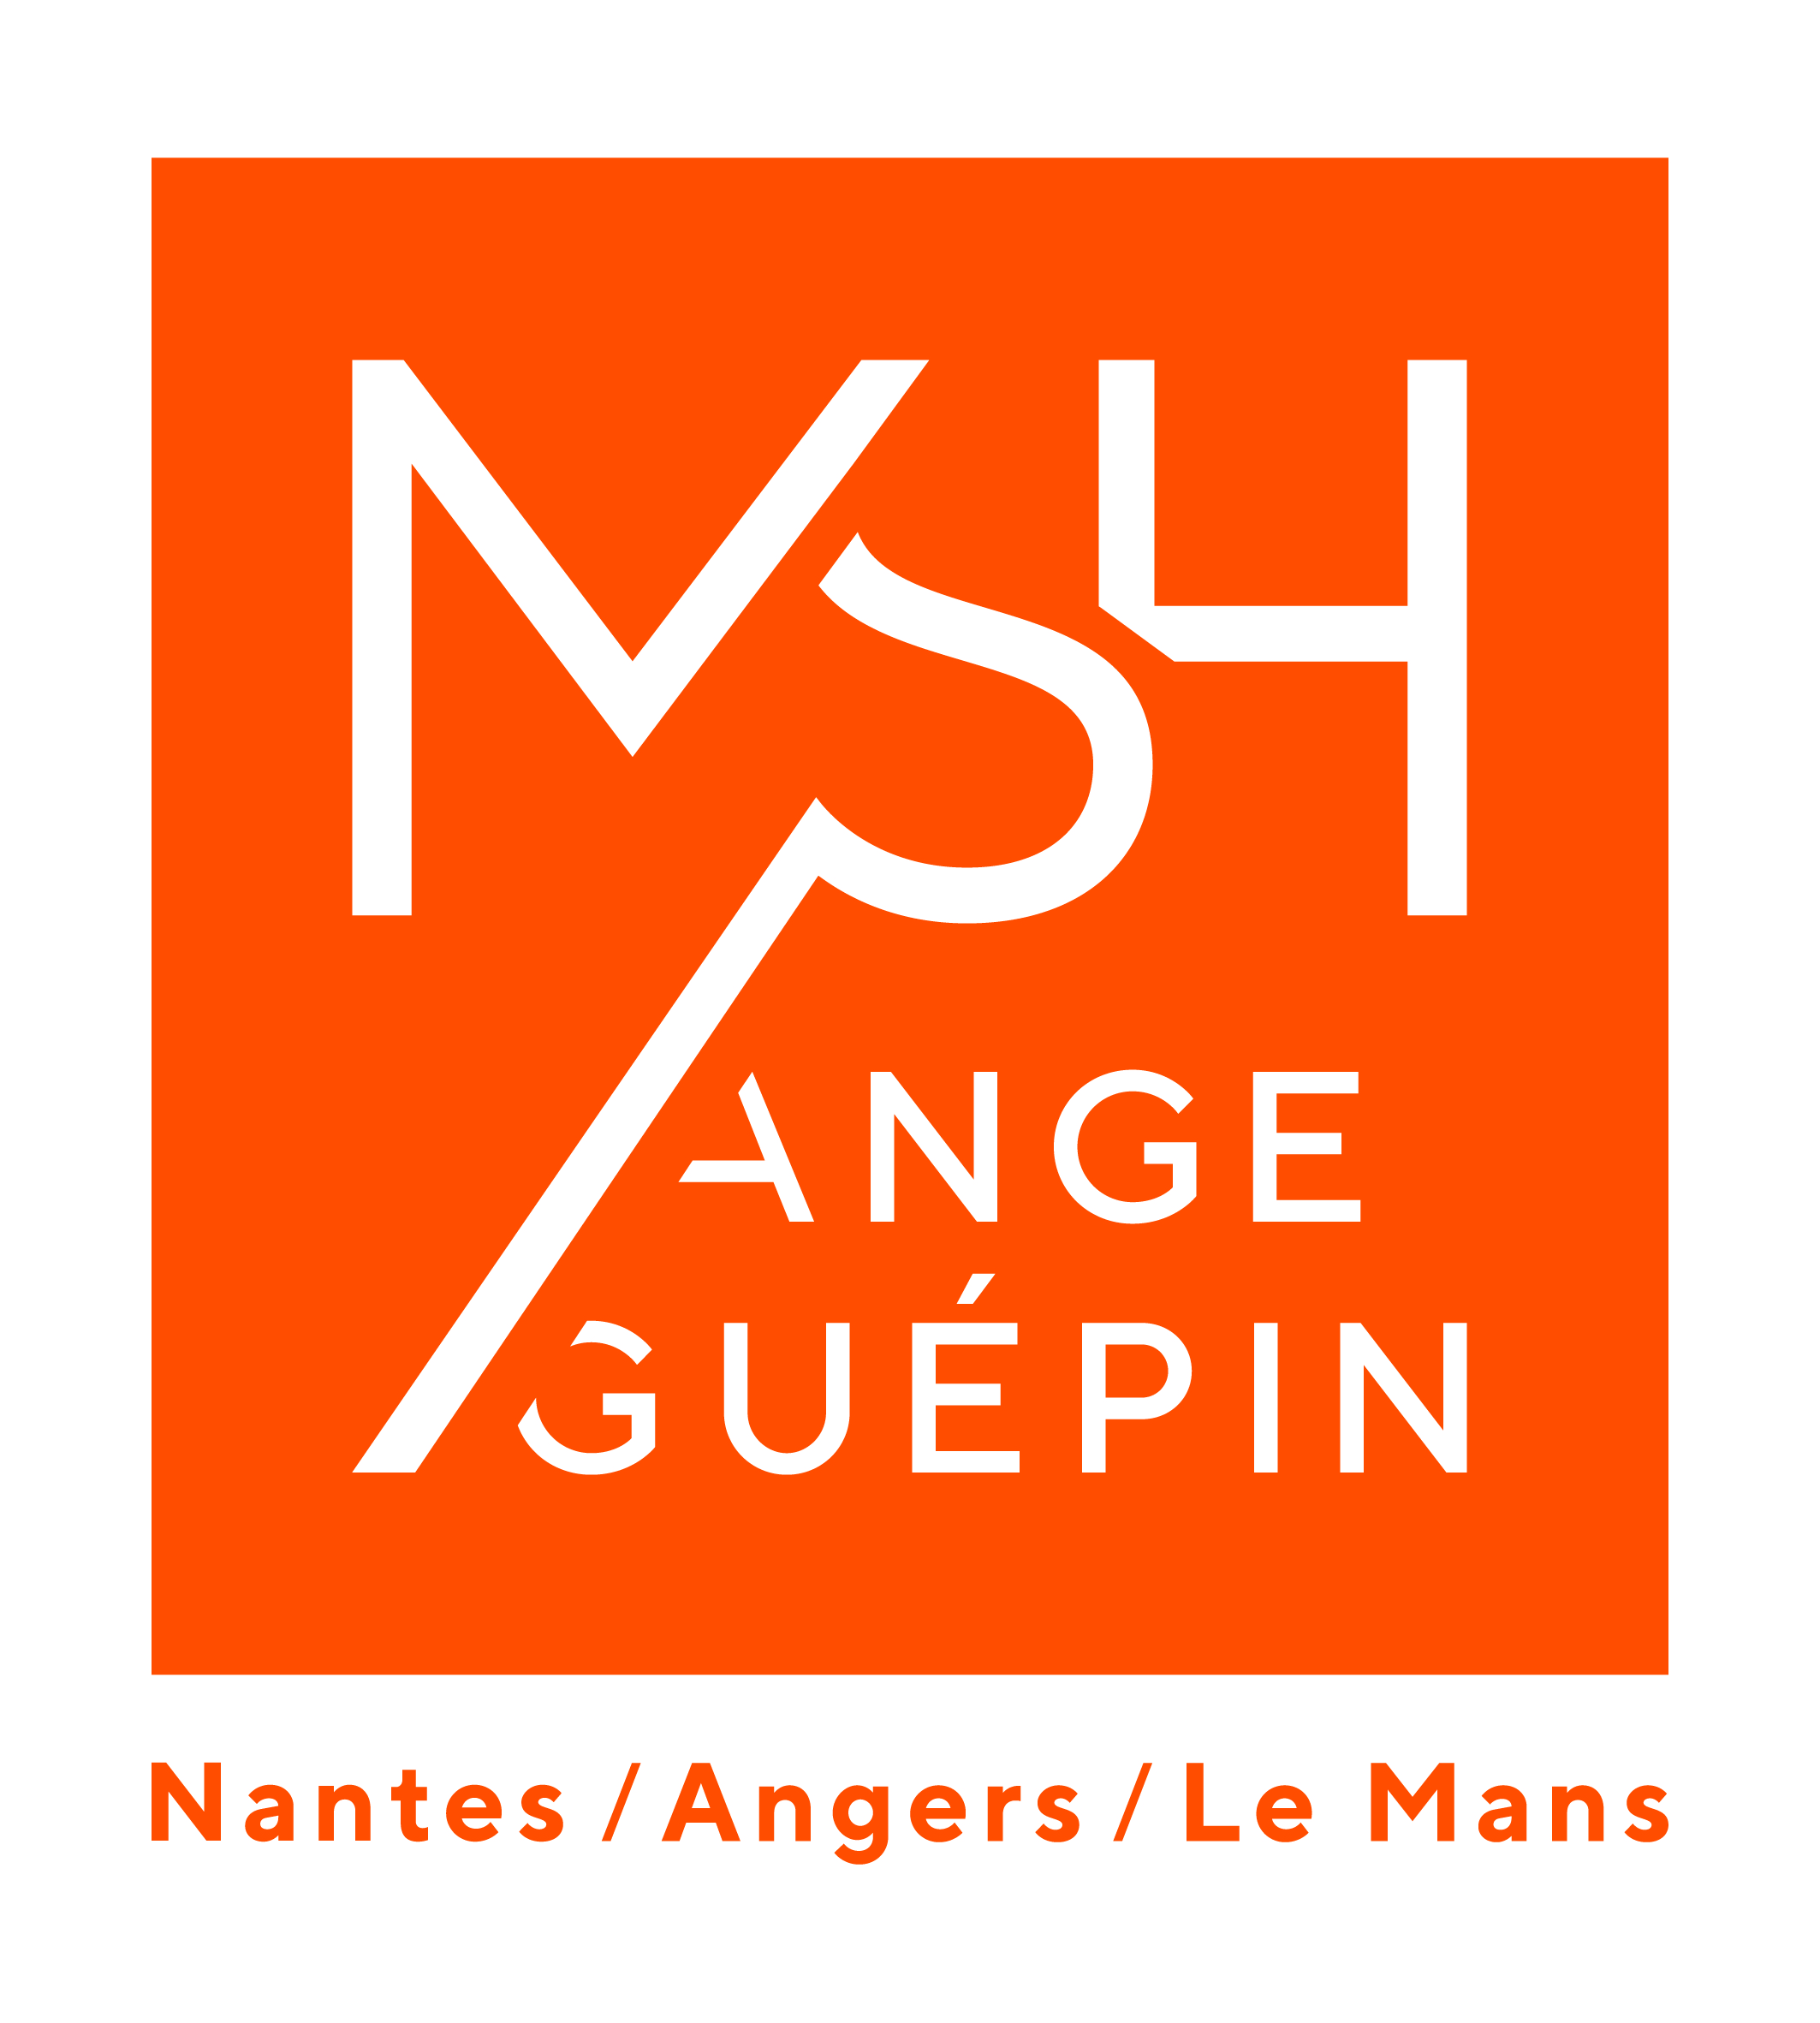 MSH Ange-Guépin